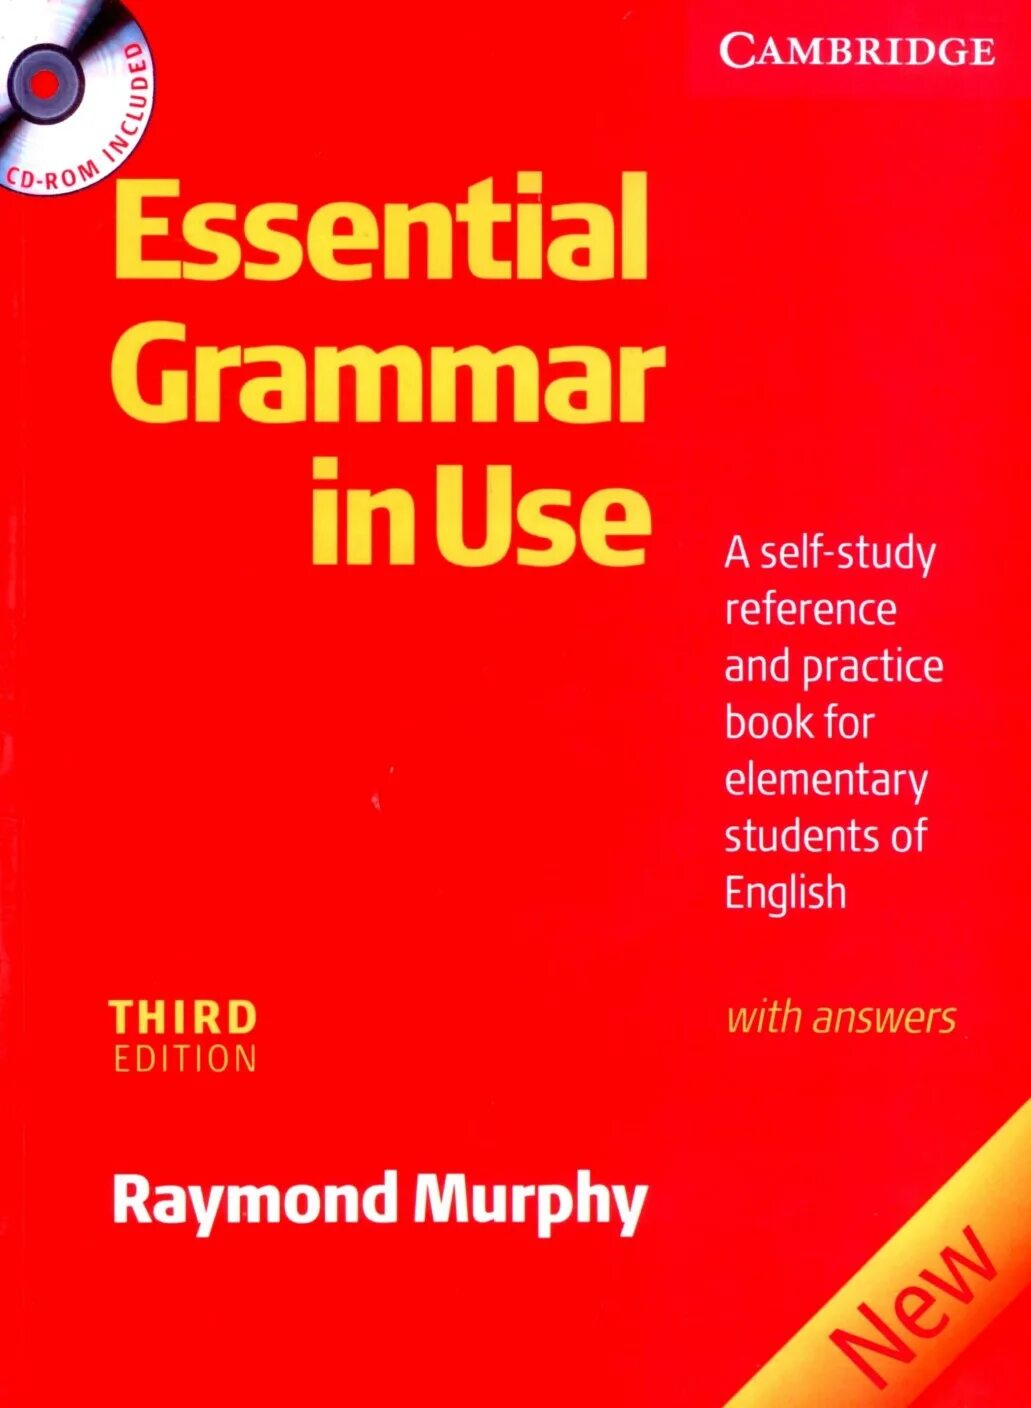 Essential Grammar in use Raymond Murphy красный Мёрфи. Английский Murphy English Grammar in use. Raymond Murphy Essential Grammar in use with answers синий.